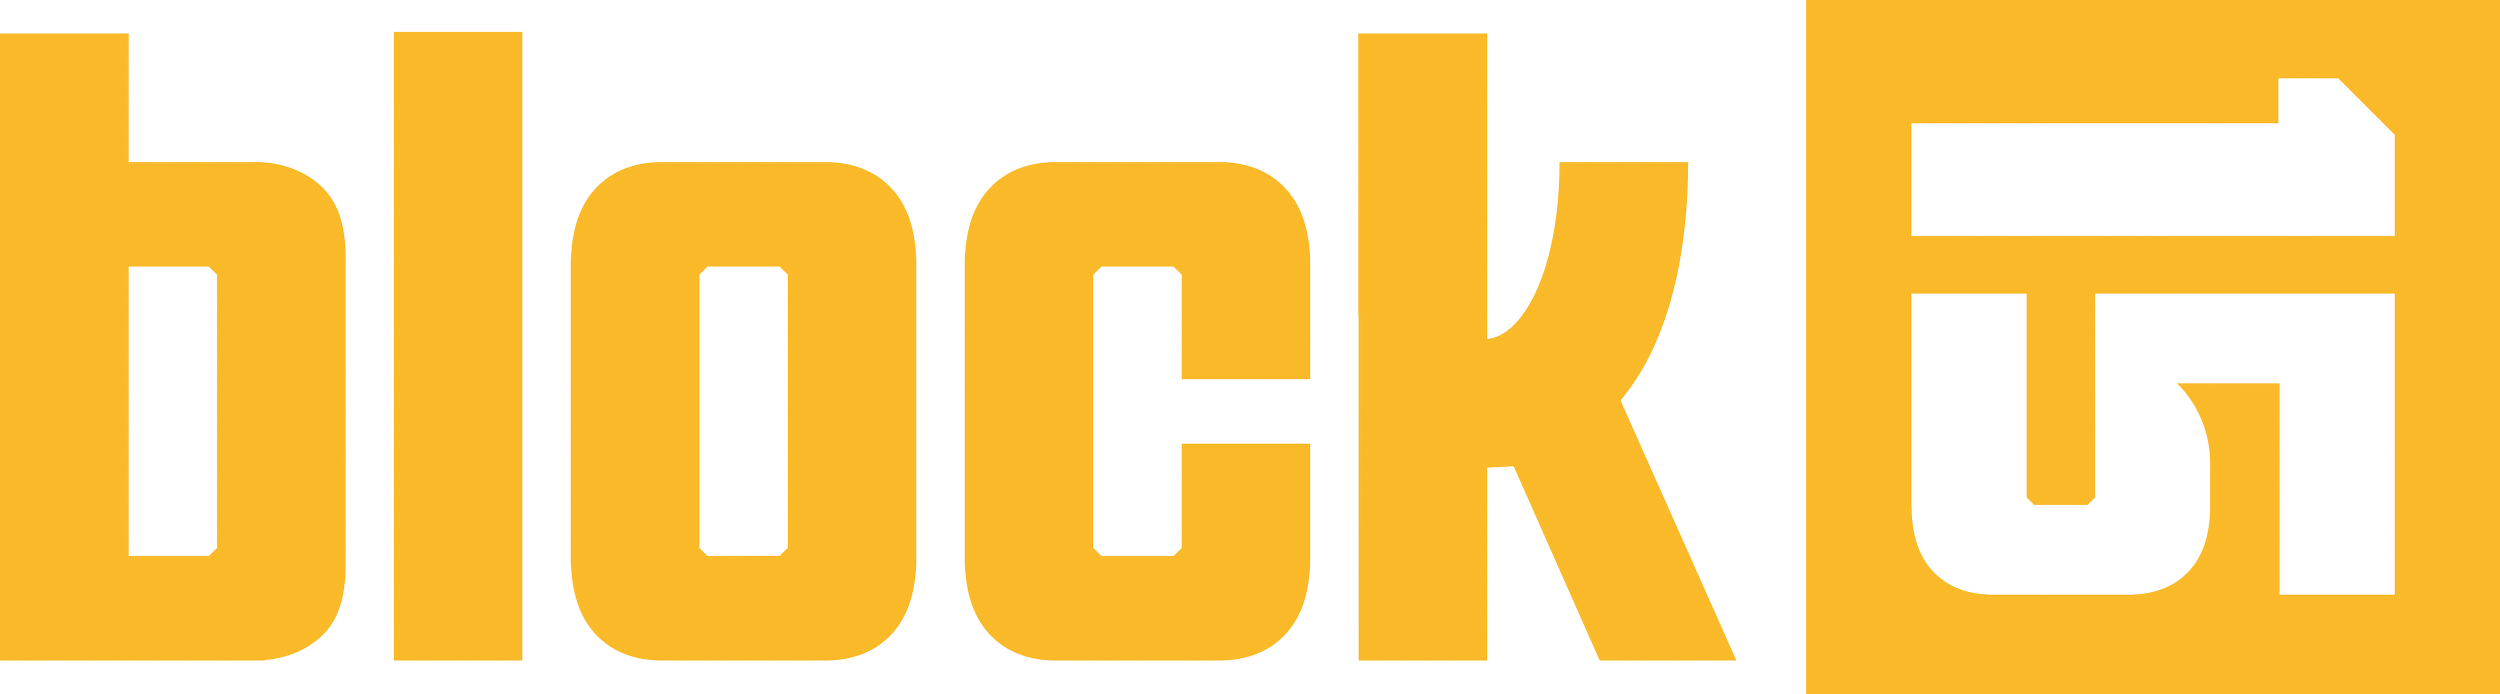 B15_Logo_Primary_Horizontal_Yellow_CMYK.png